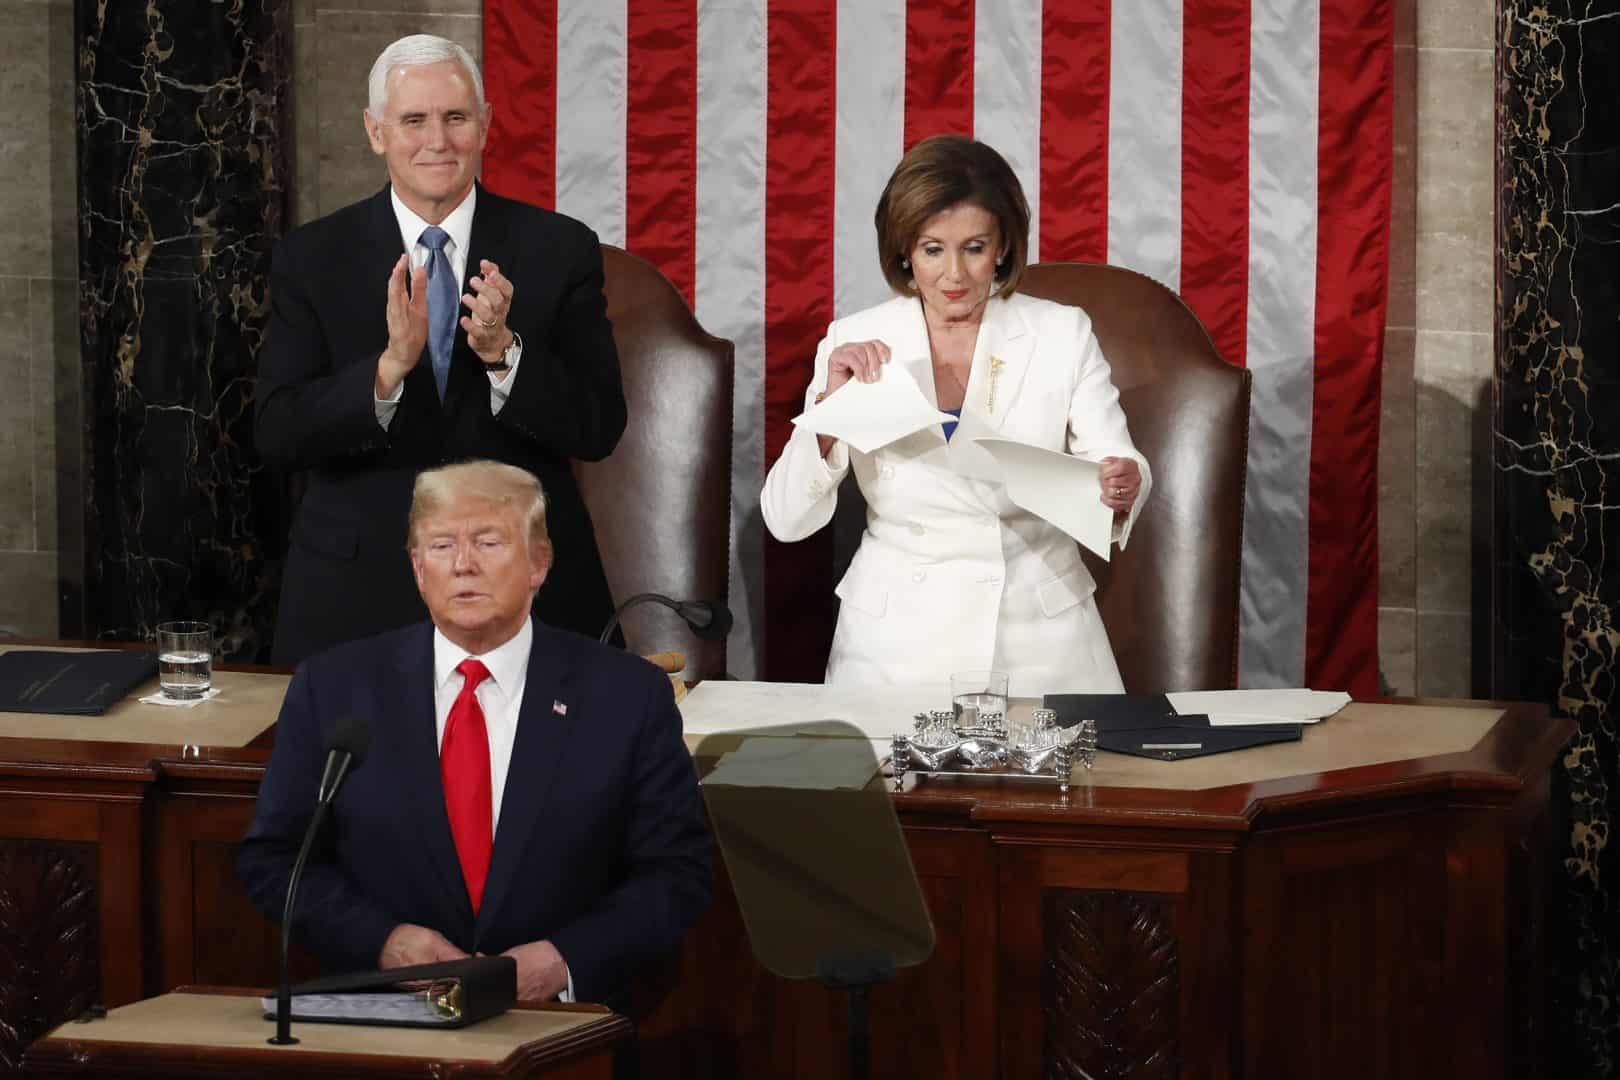 Nancy Pelosi rips up Donald Trump’s speech